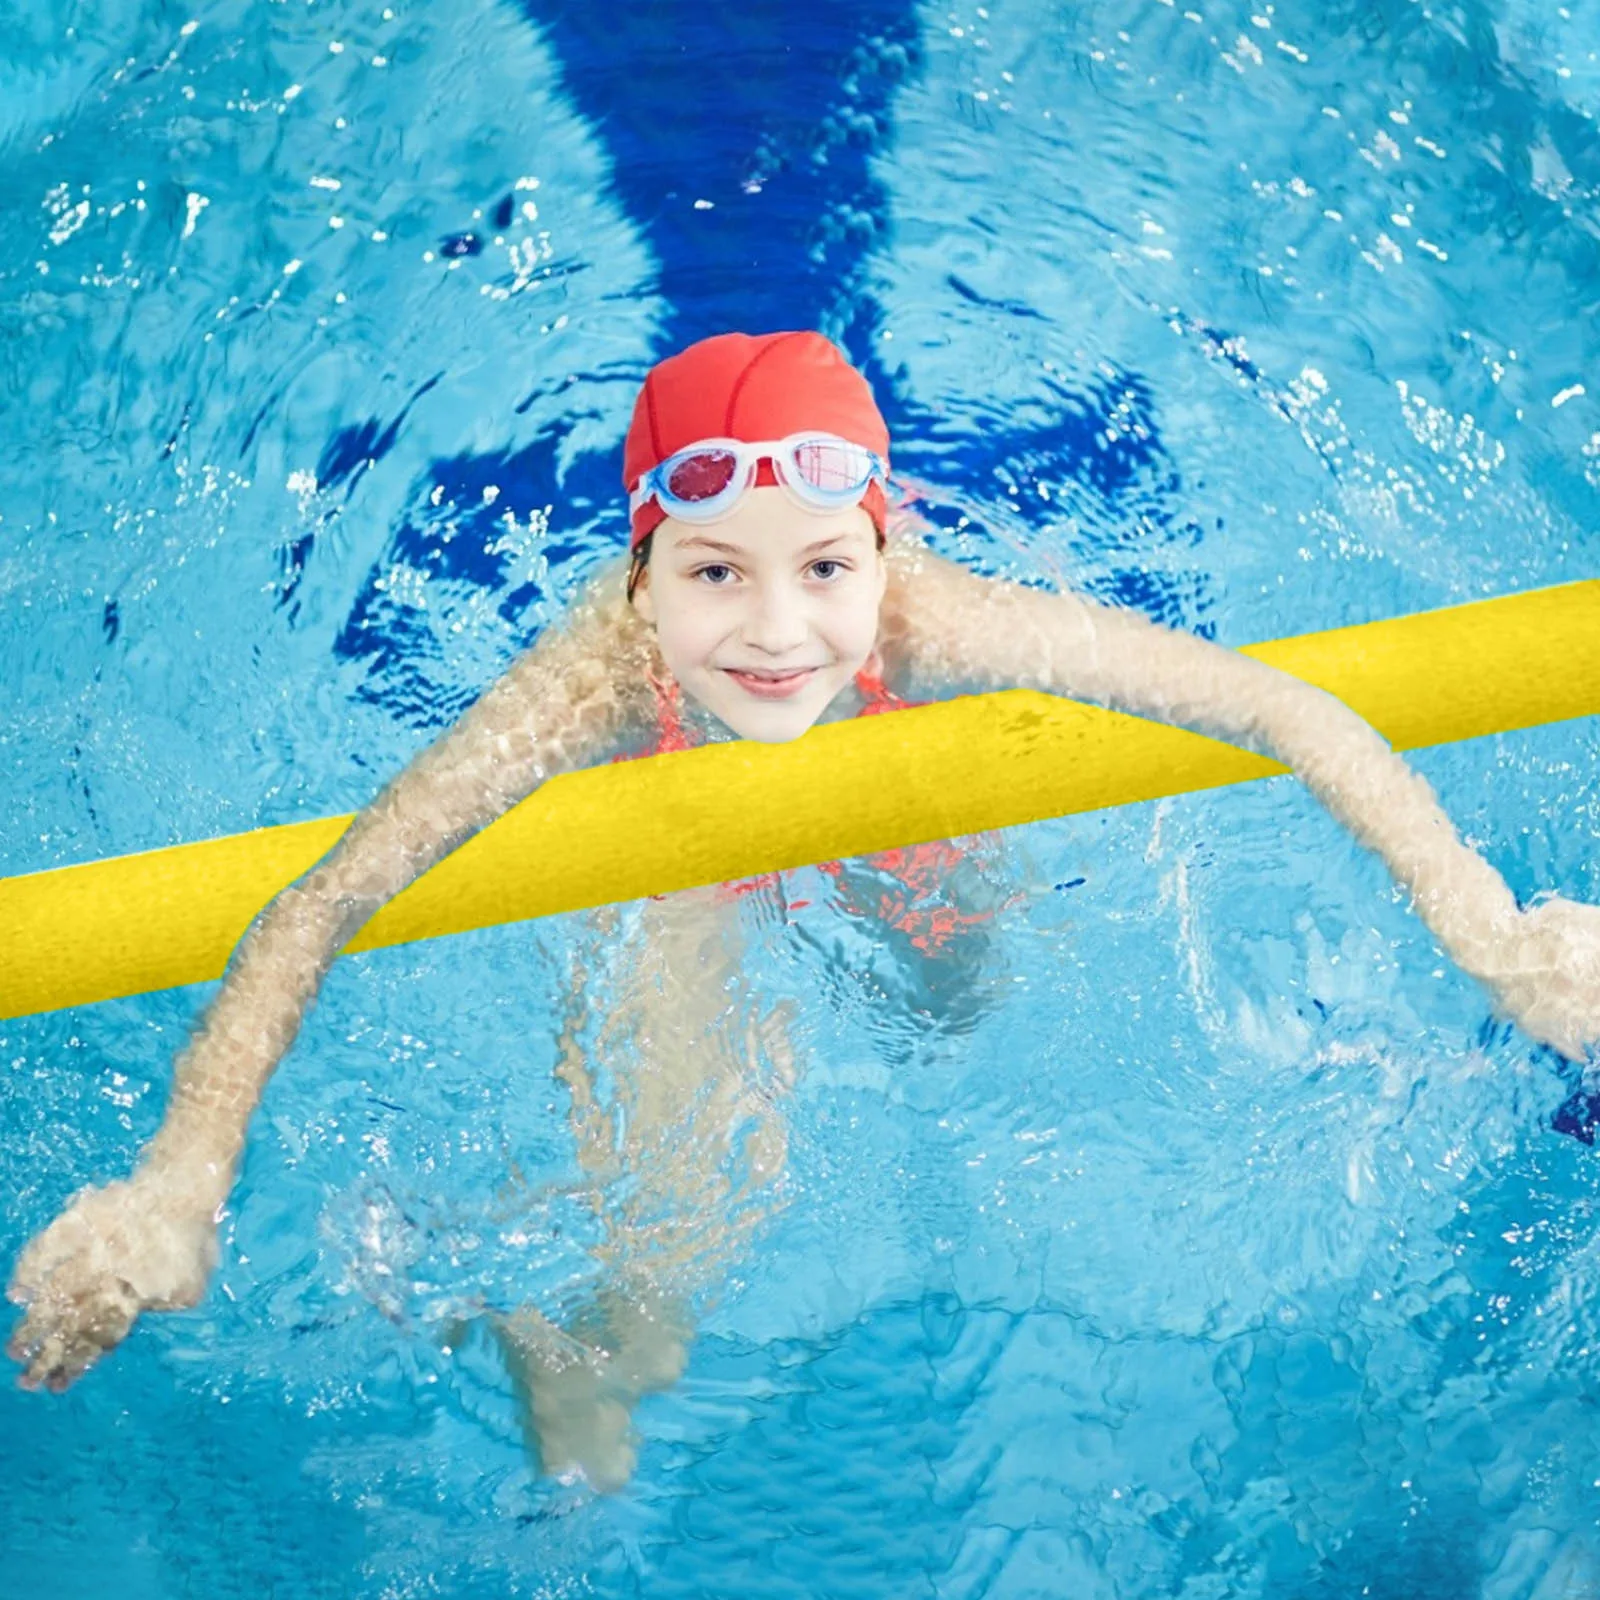 FJ Swimming Pool Floating Foam Water Noodle Kids Adult Swim Aid Beach Toy Eyefu 